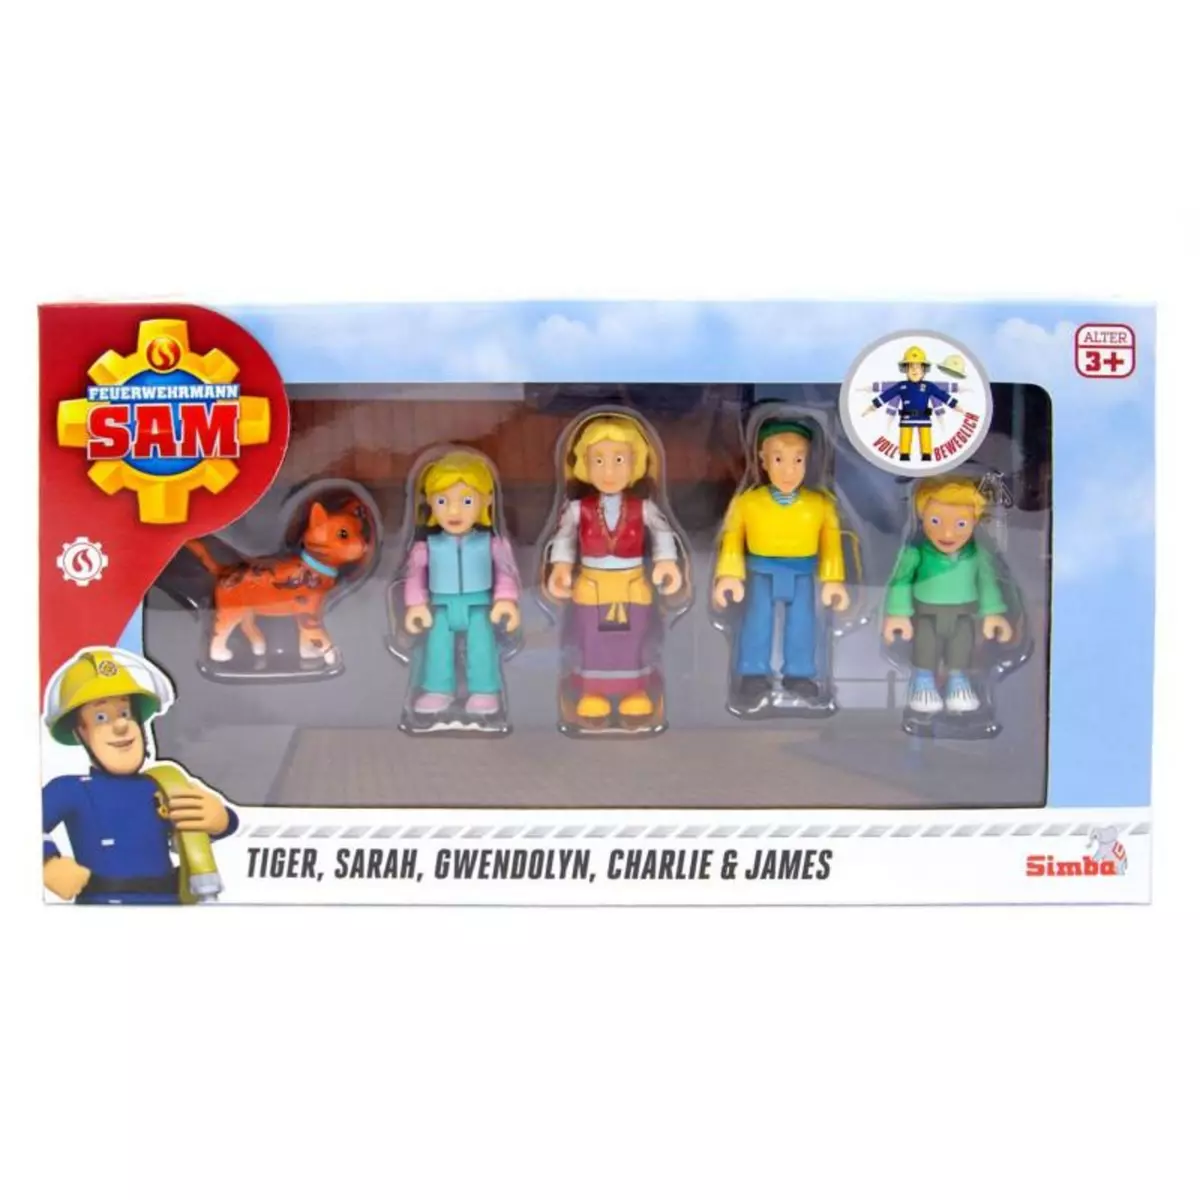 SIMBA SIMBA Fireman Sam Toy Figures - The Jones Family